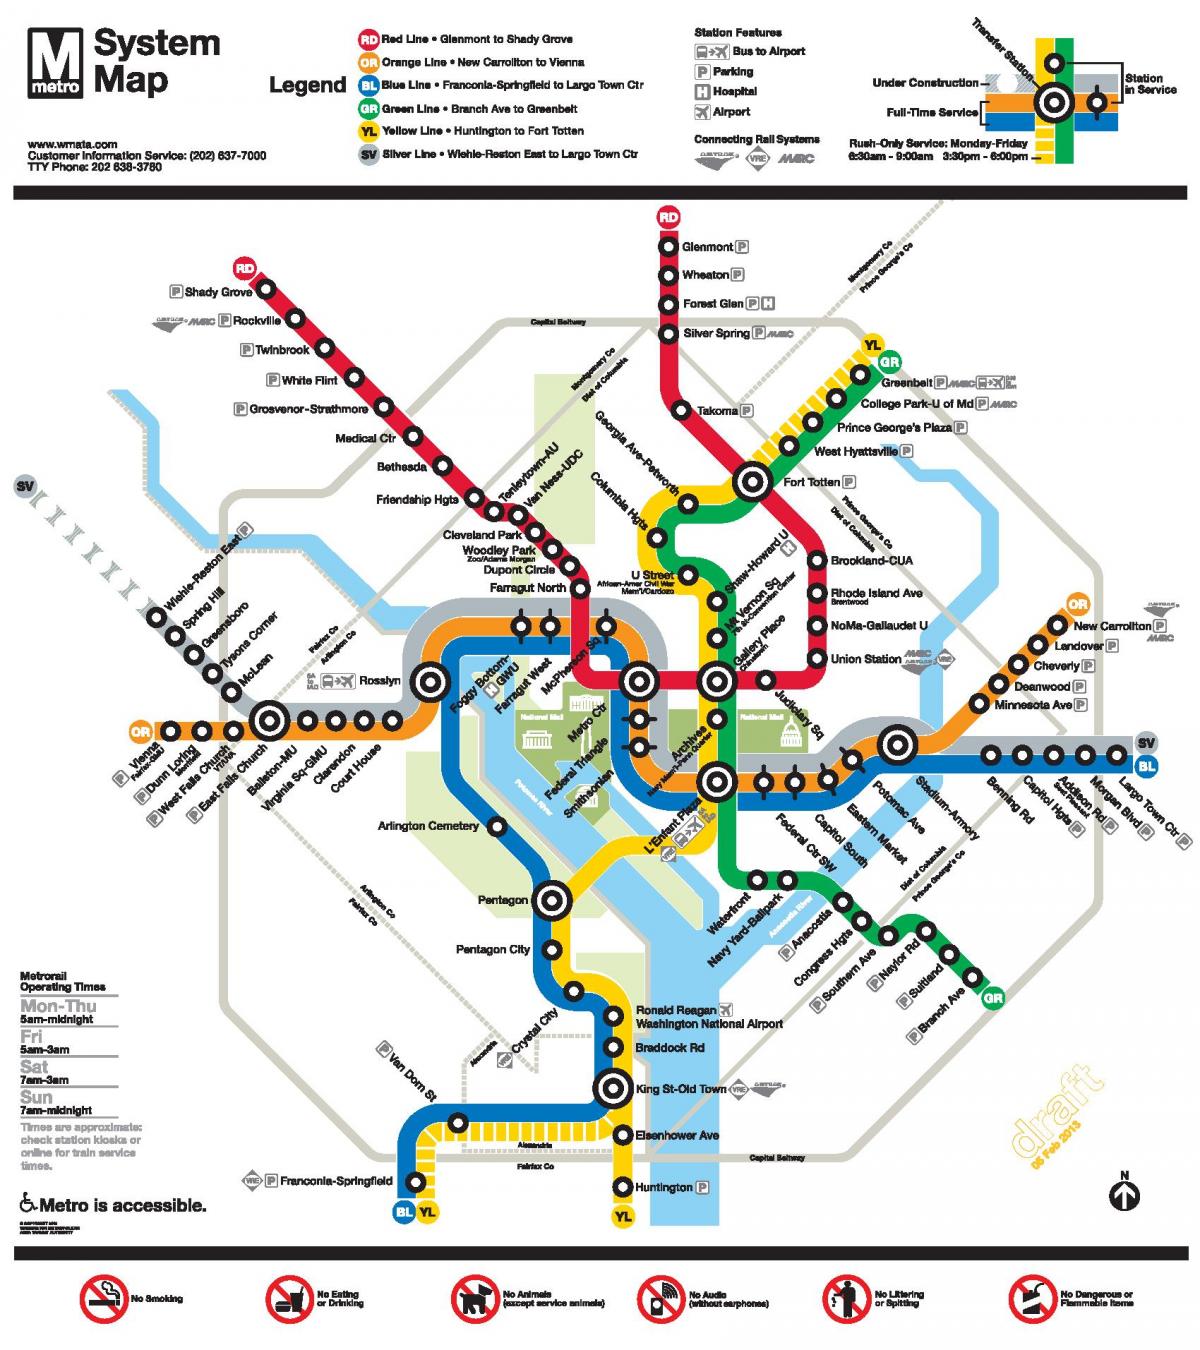 вашингтон метро линија мапа